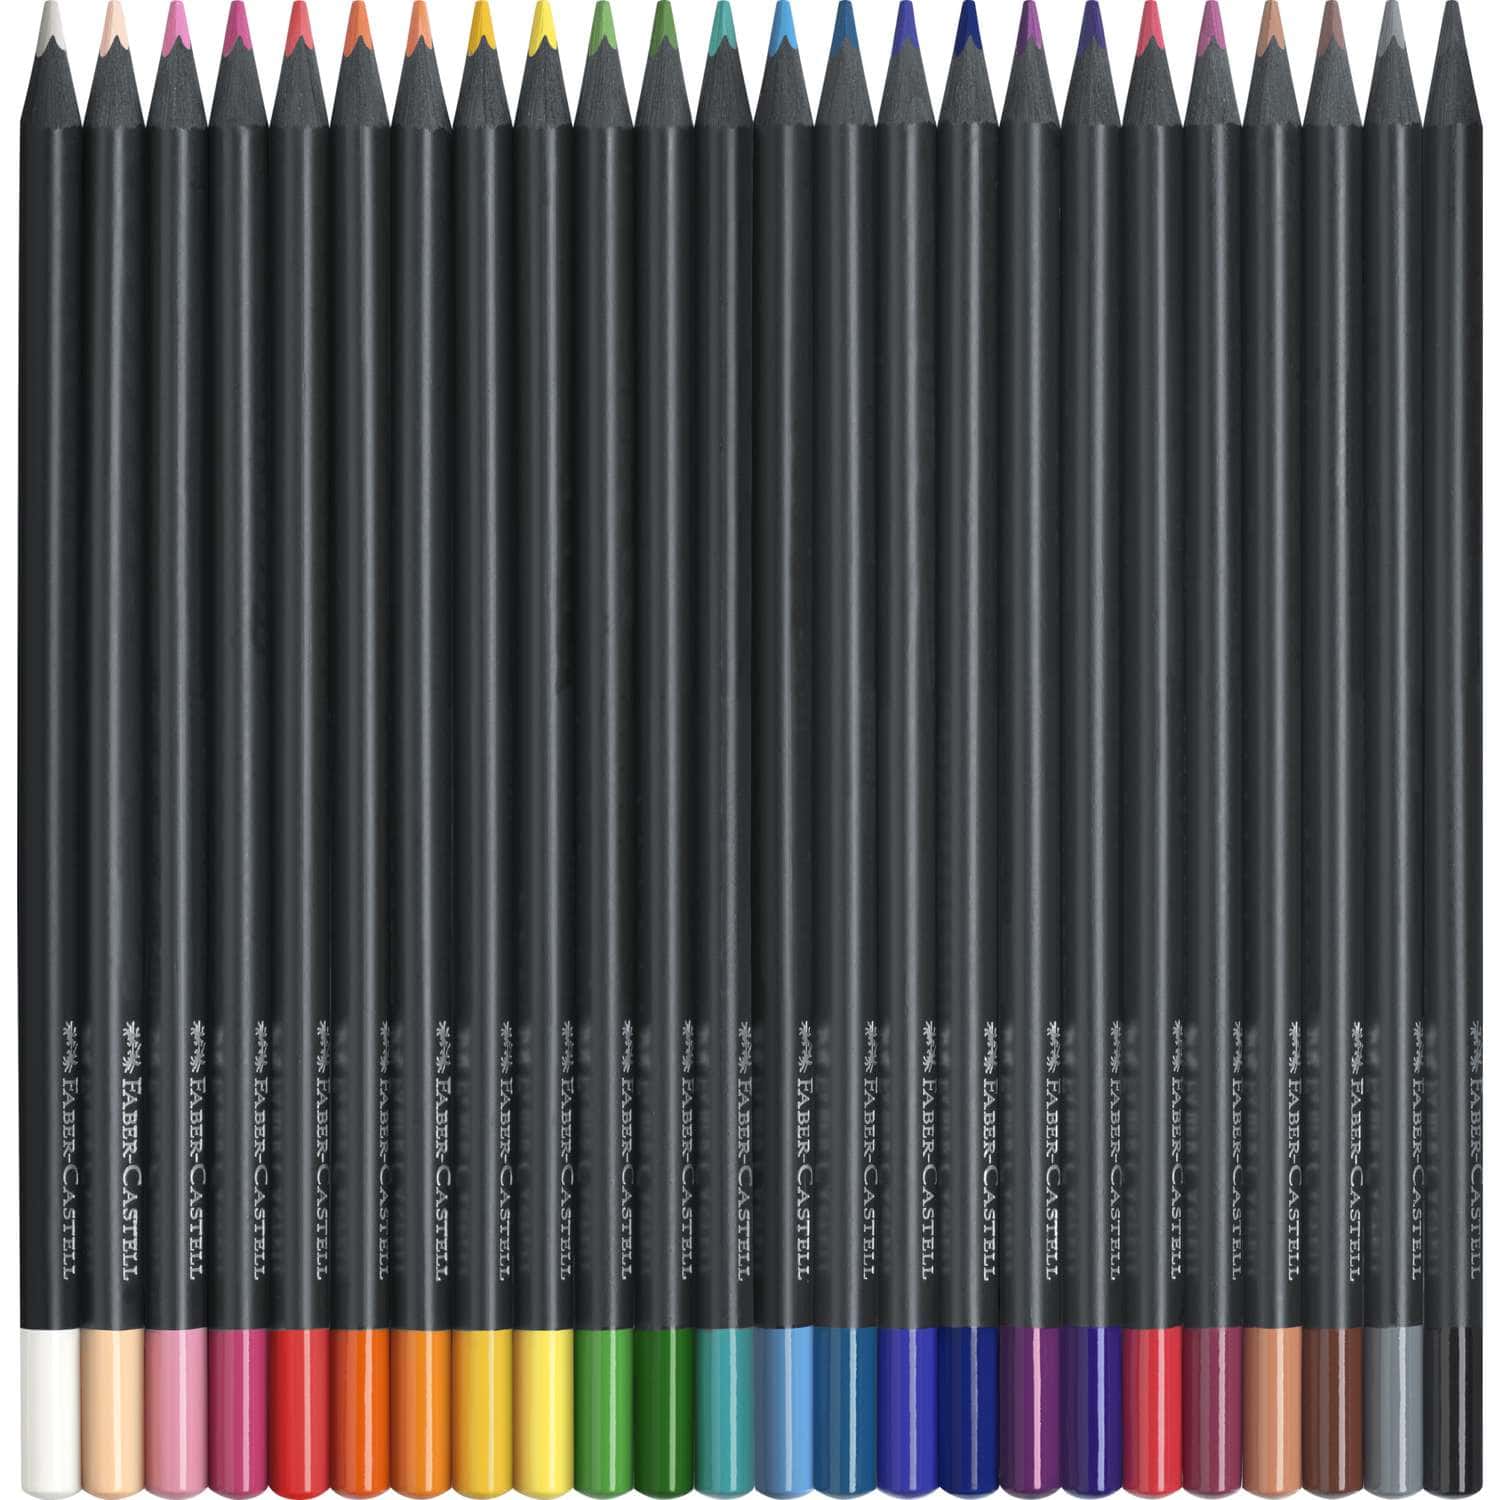 Lápices de colores Black Edition de Faber Castell - Noticias de Arte  Totenart